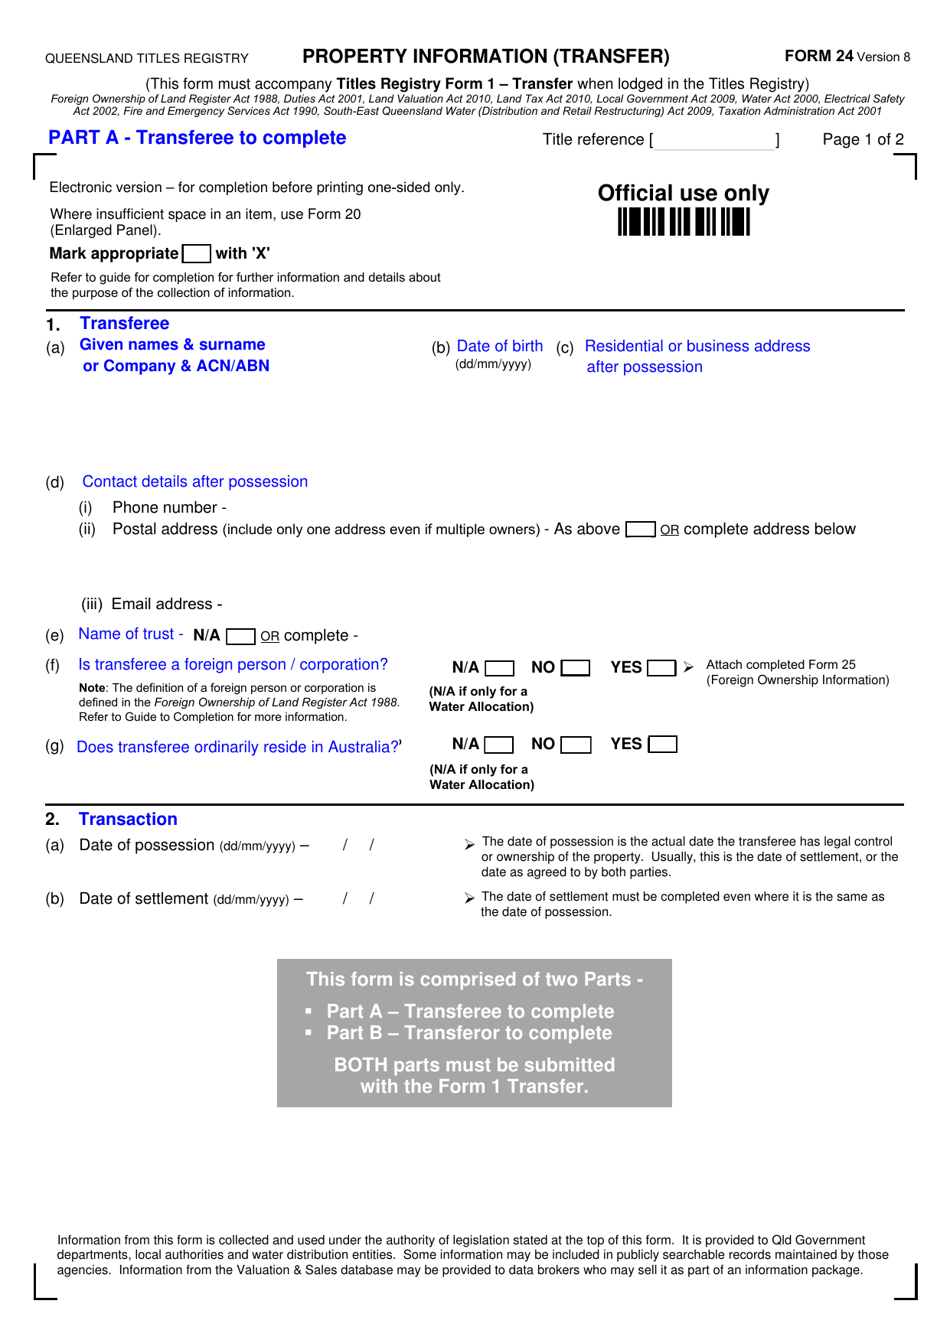 Form 24 Property Information (Transfer) - Queensland, Australia, Page 1